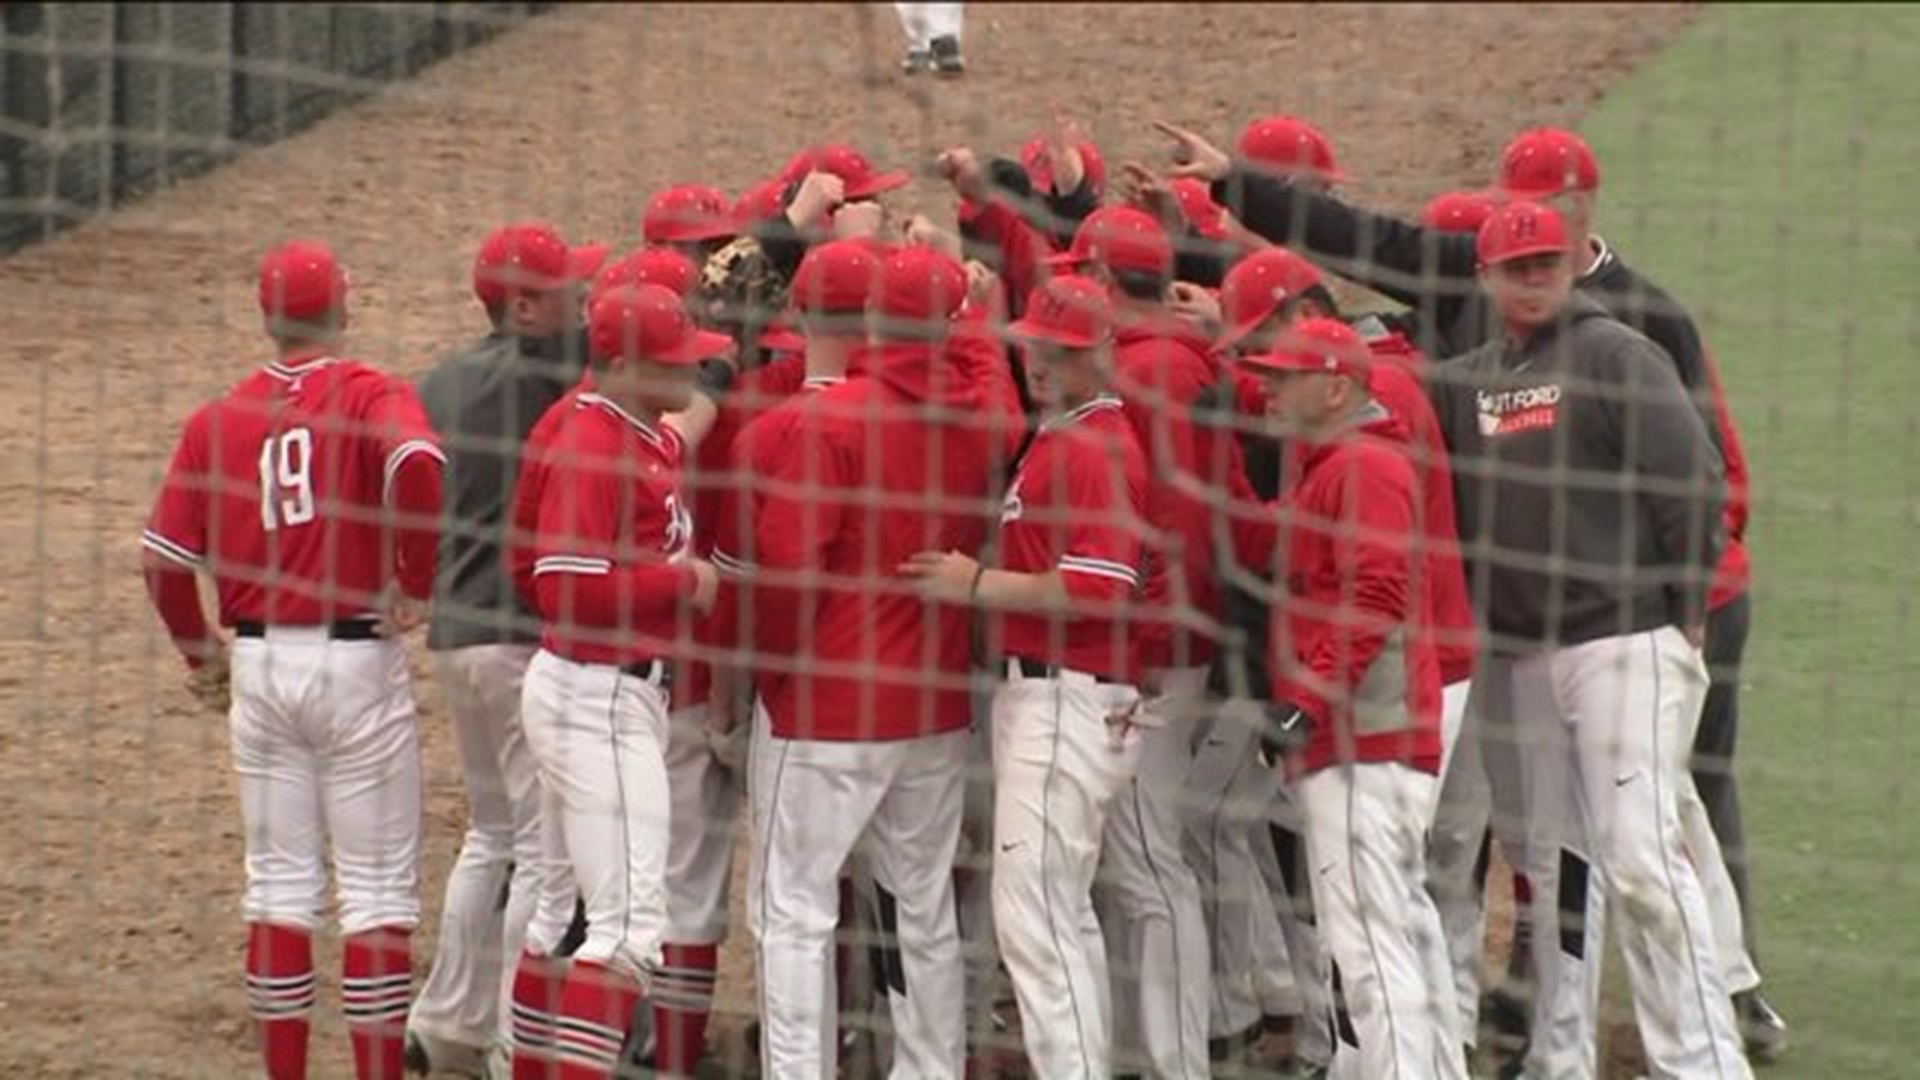 University of Hartford sees big turnaround in baseball program